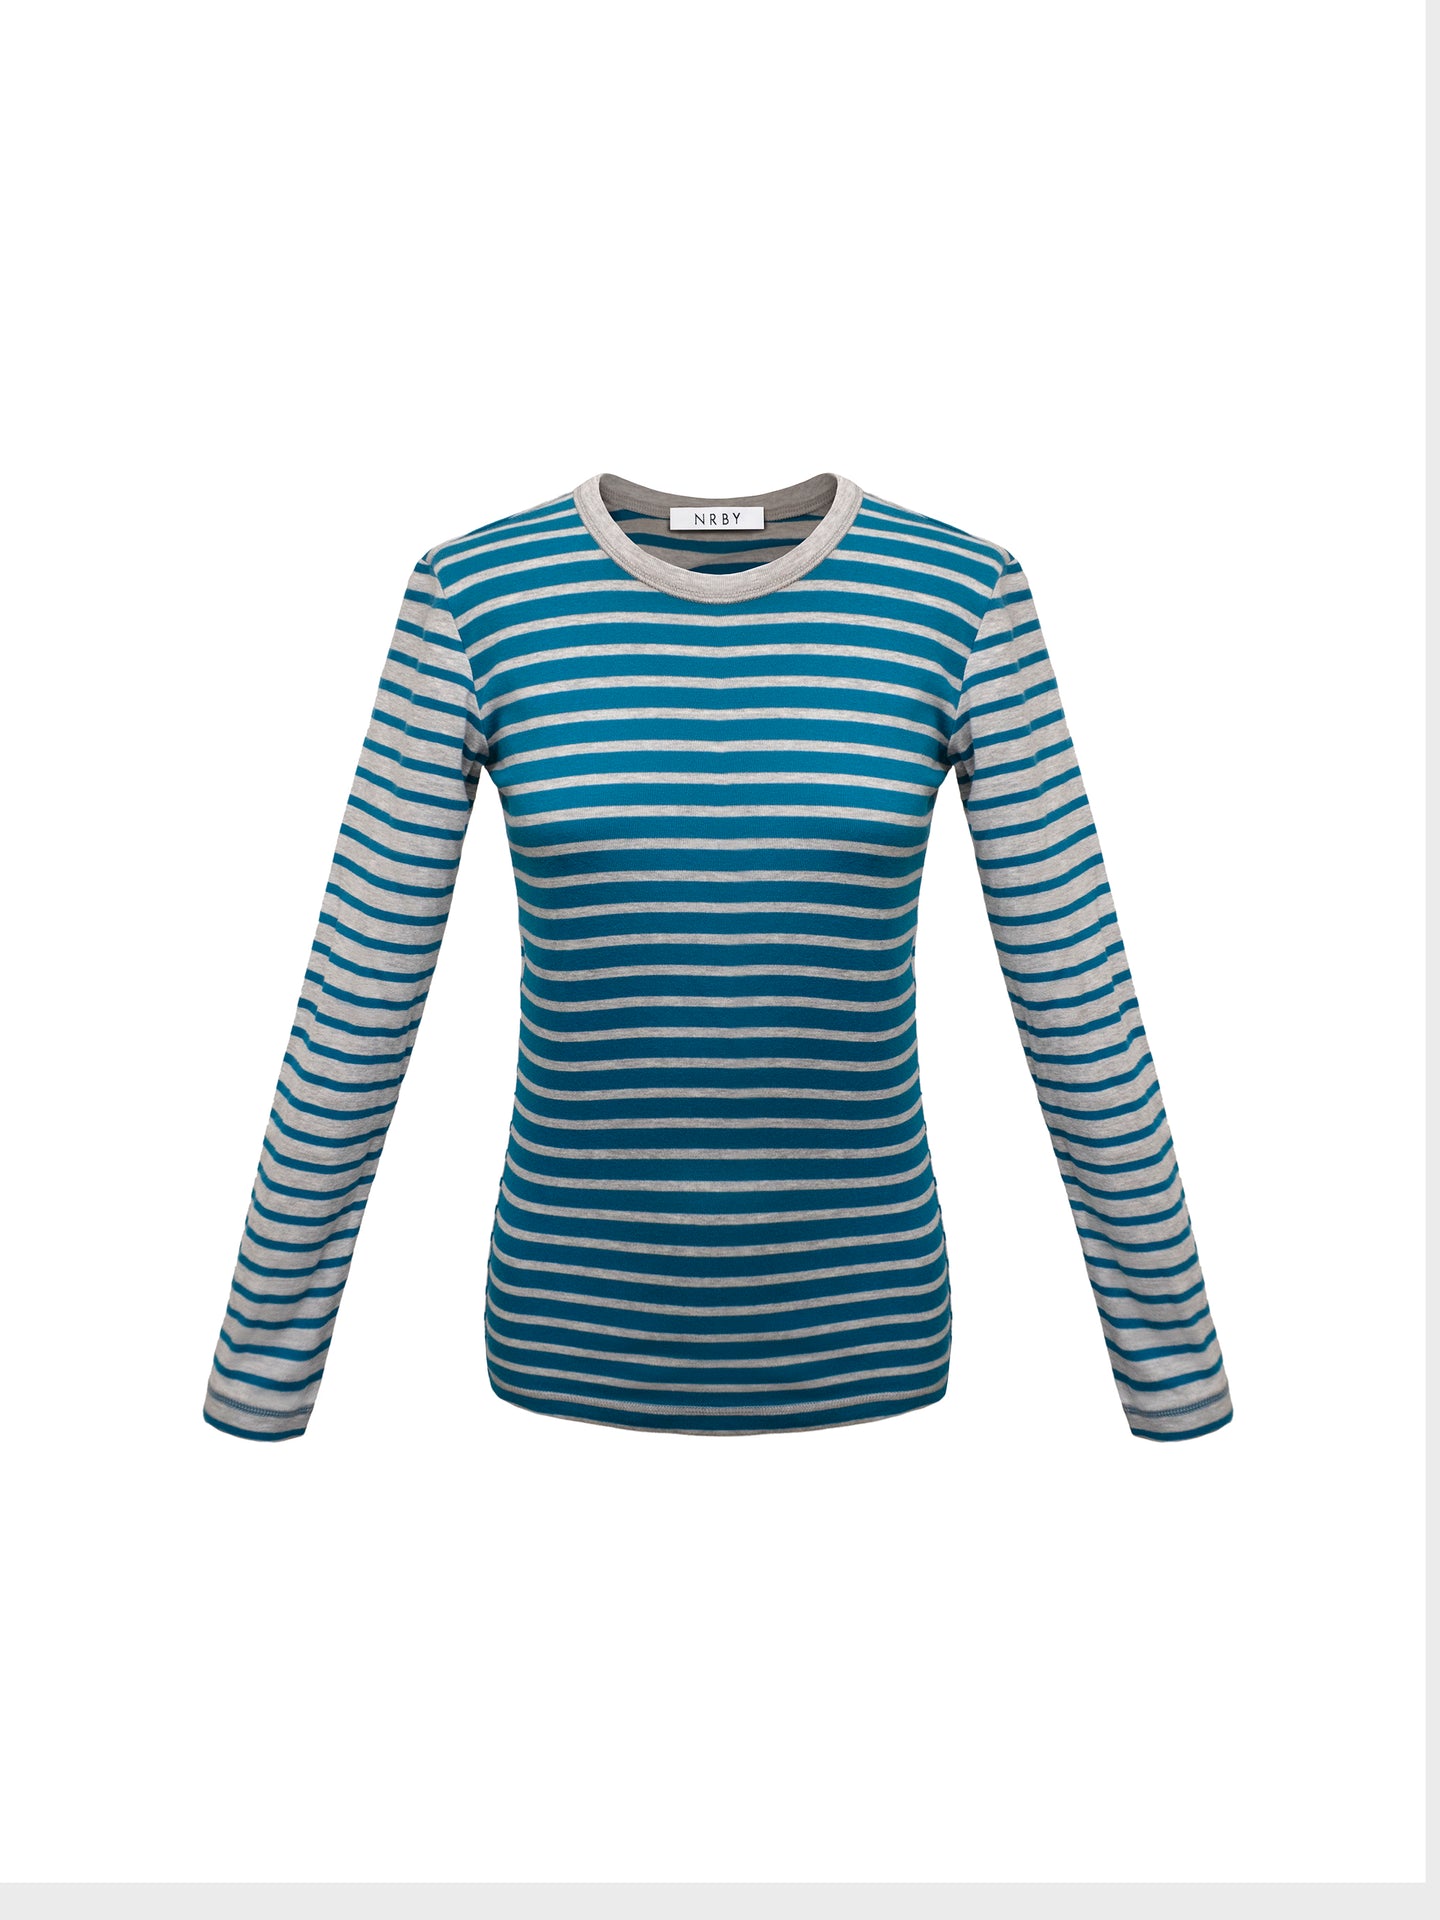 Billie two-tone cotton rib stripe t-shirt - Grey/Peacock Blue